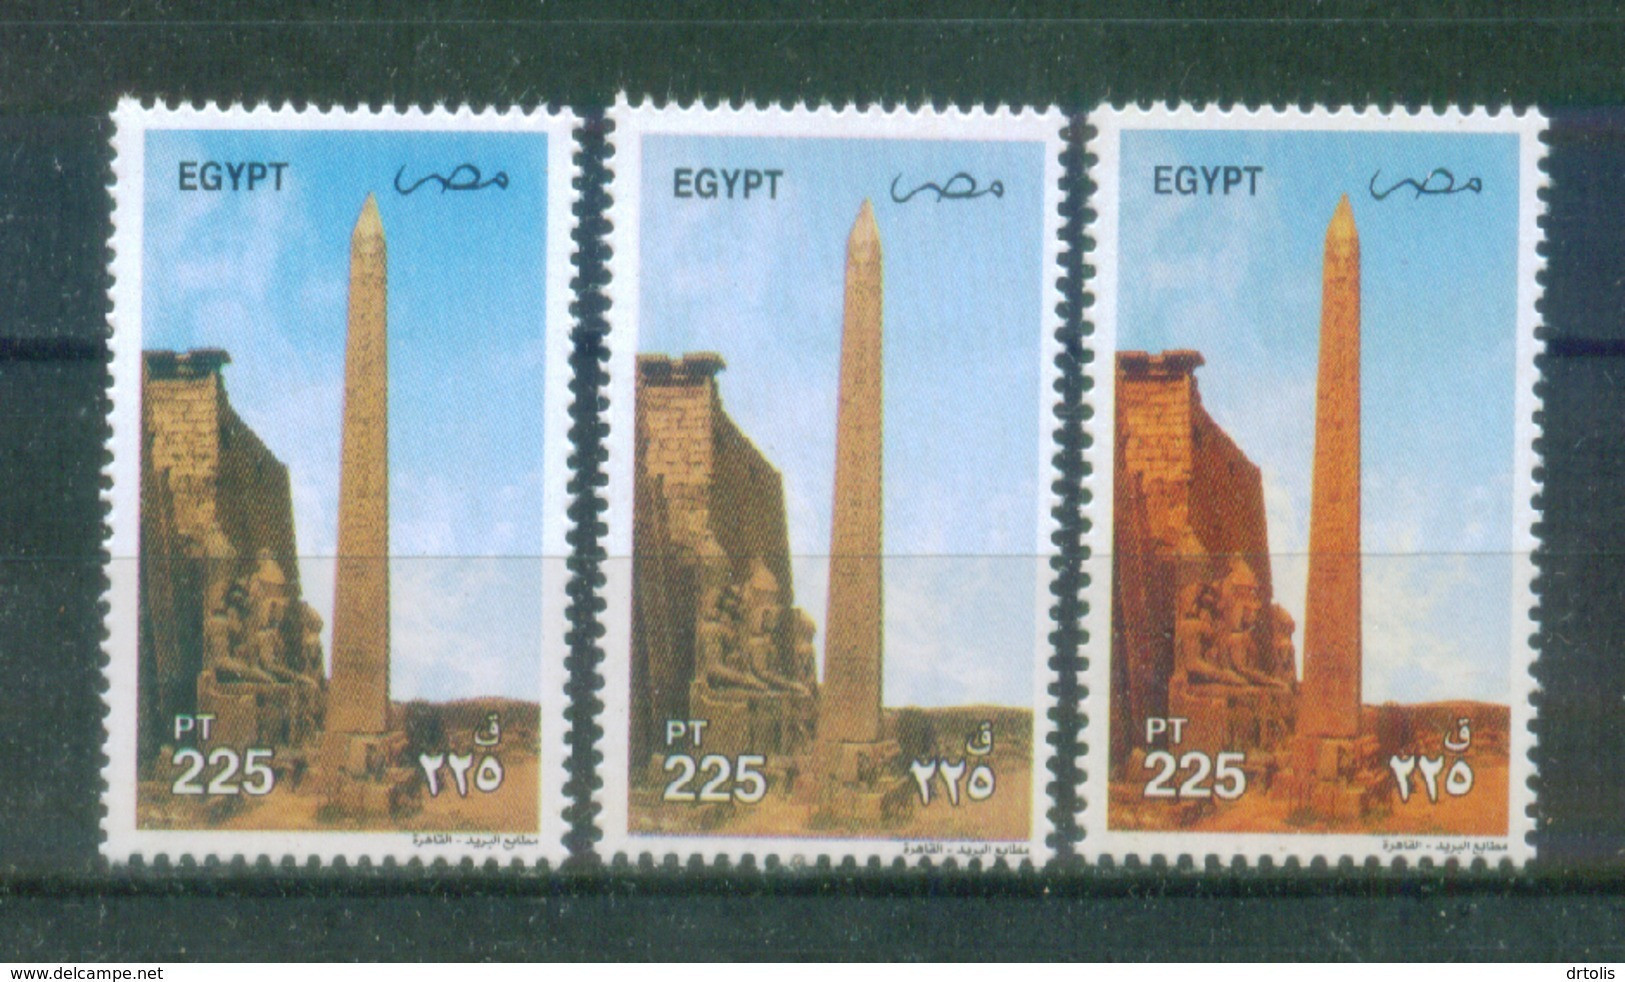 EGYPT / 2002 / RAMESES II OBELISK ; LUXOR / 3 DIFFERENT ISSUES / EGYPTOLOGY / ARCHEOLOGY / EGYPT ANTIQUITY / MNH - Nuevos